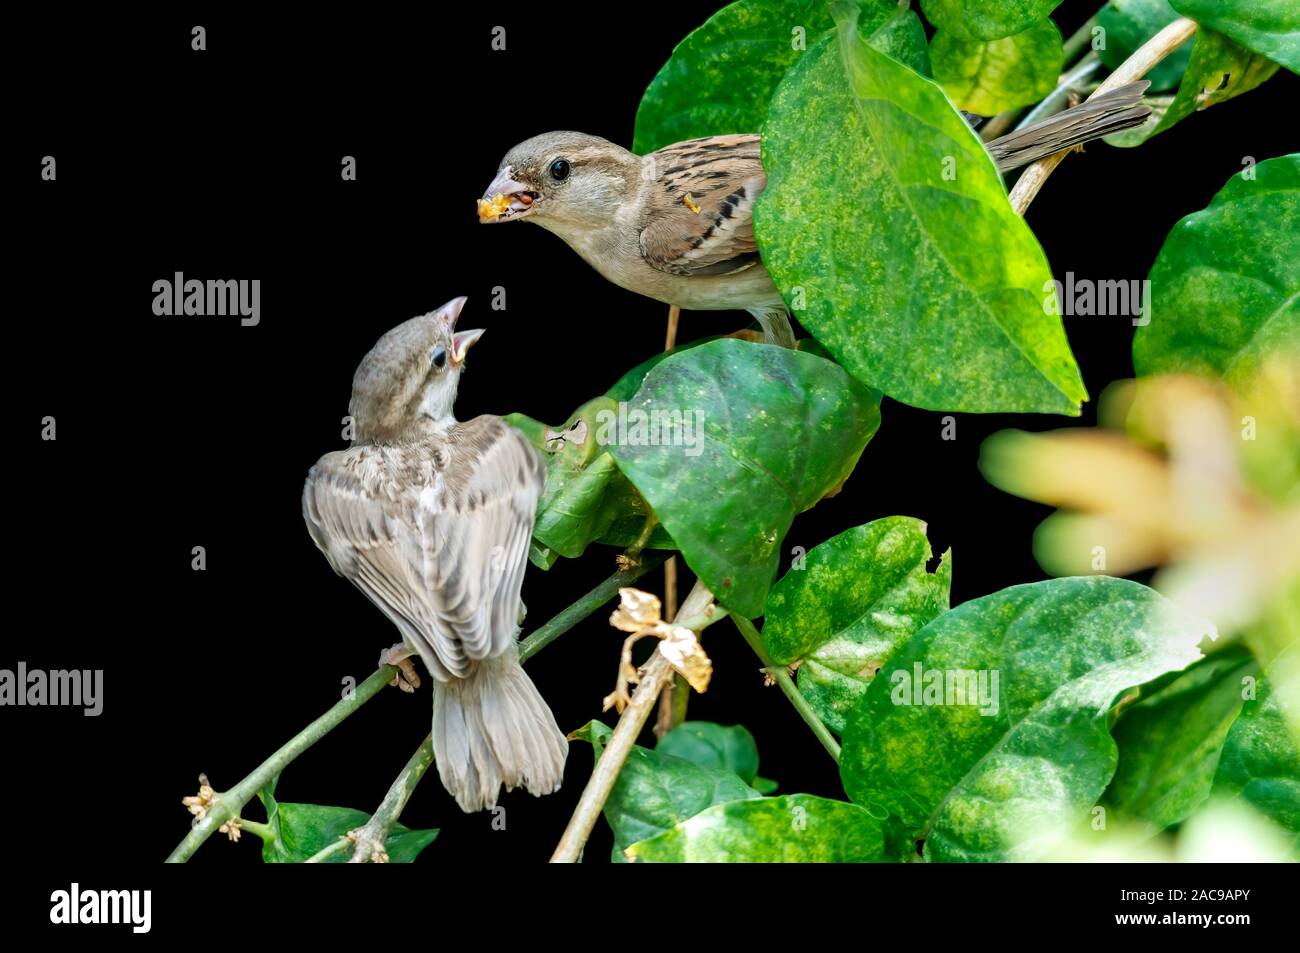 A female house sparrow feeding chick on a plant Stock Photo